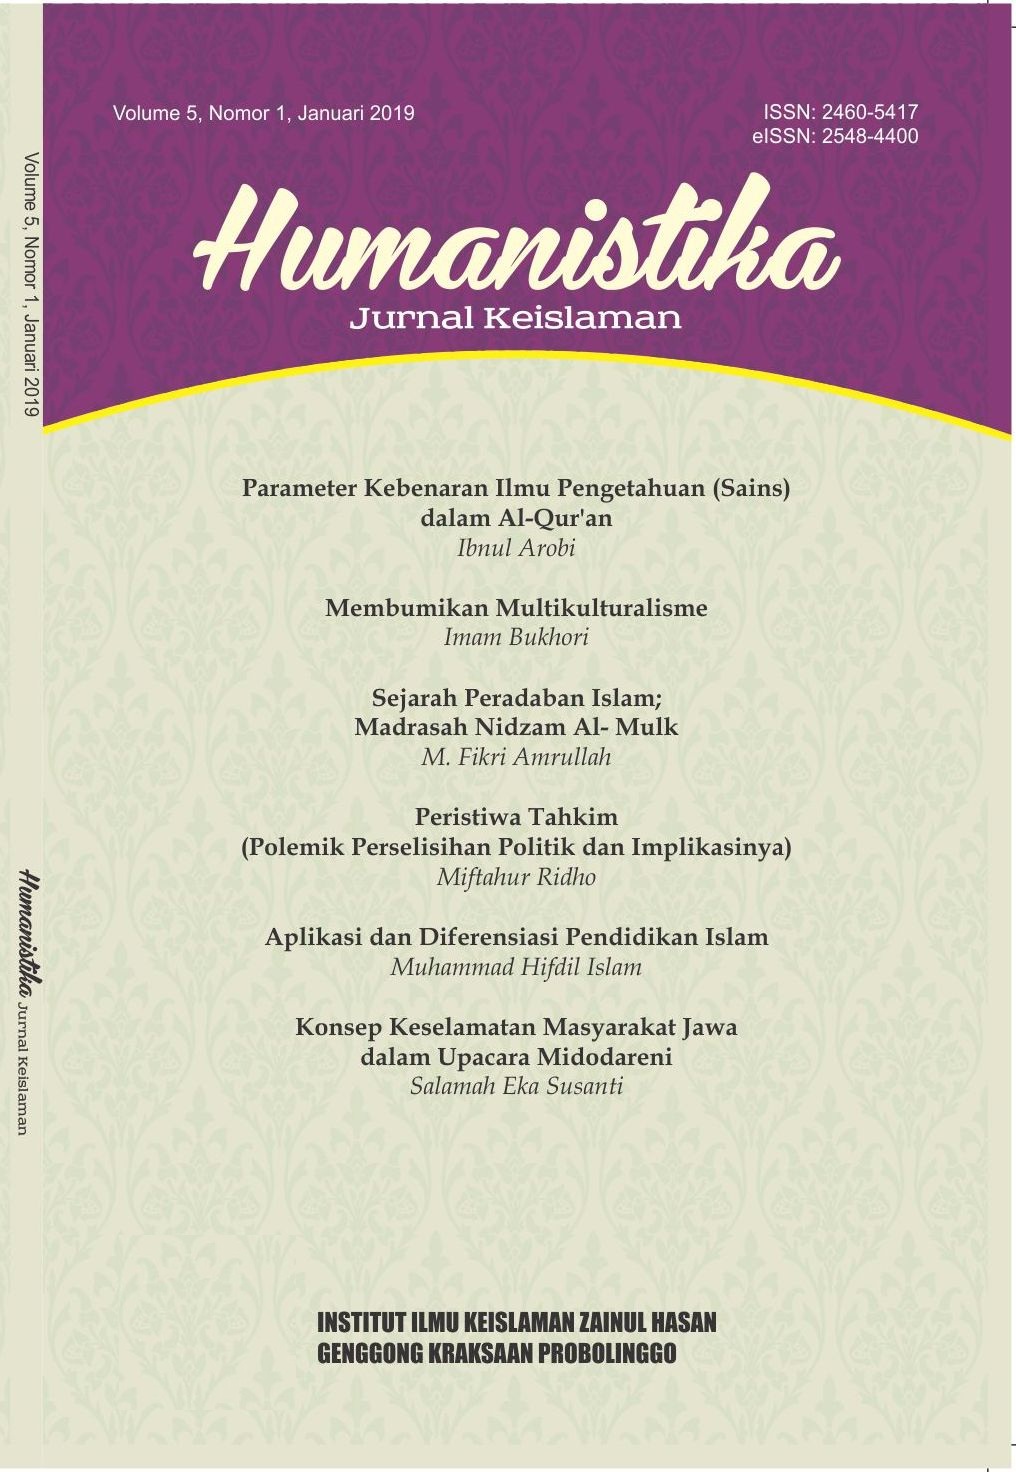 Humanistika